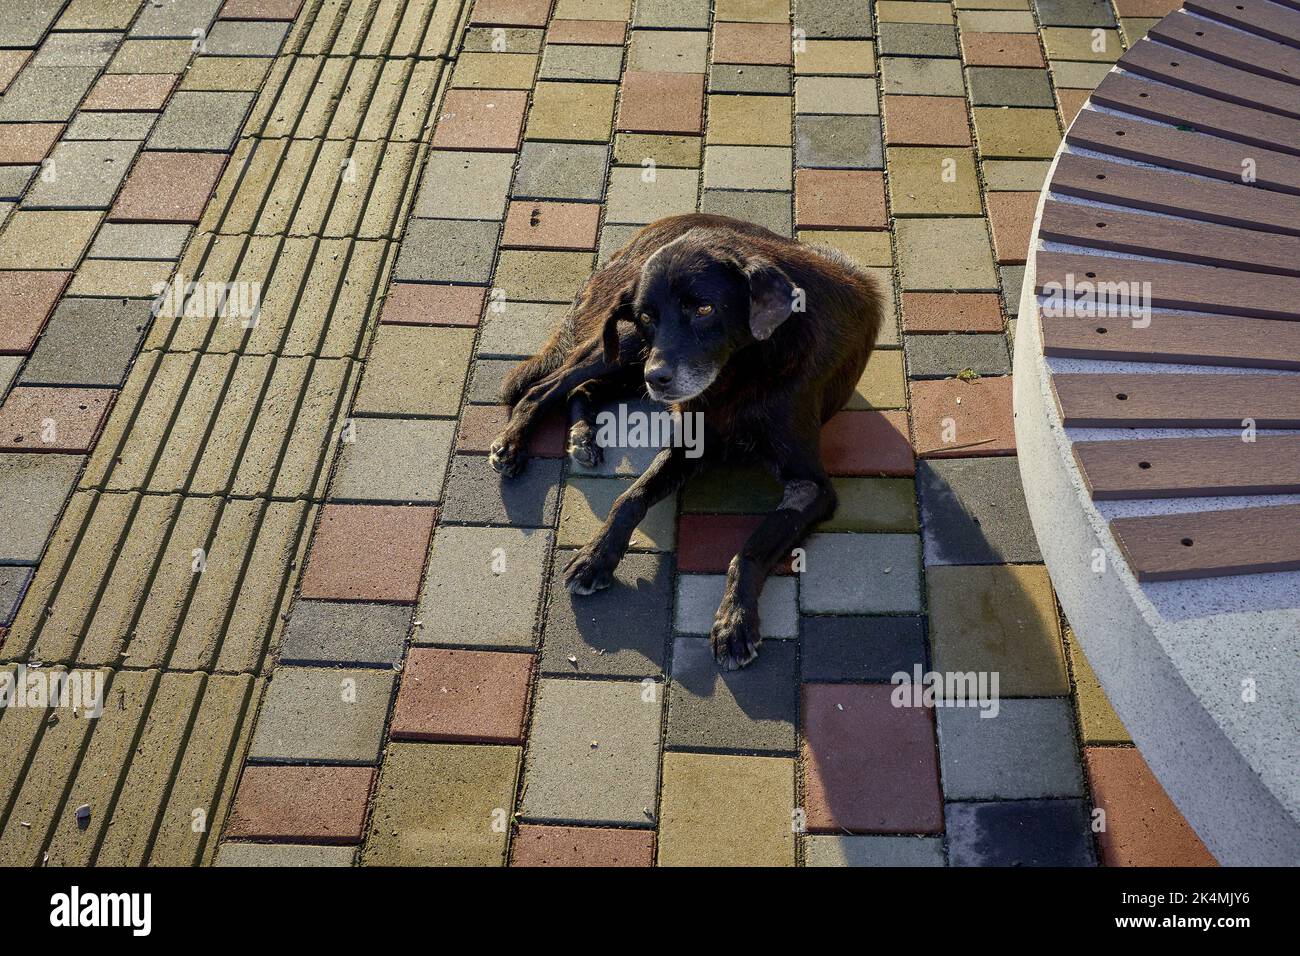 Sad and homeless dog lying on the background of the city sidewalk Stock Photo